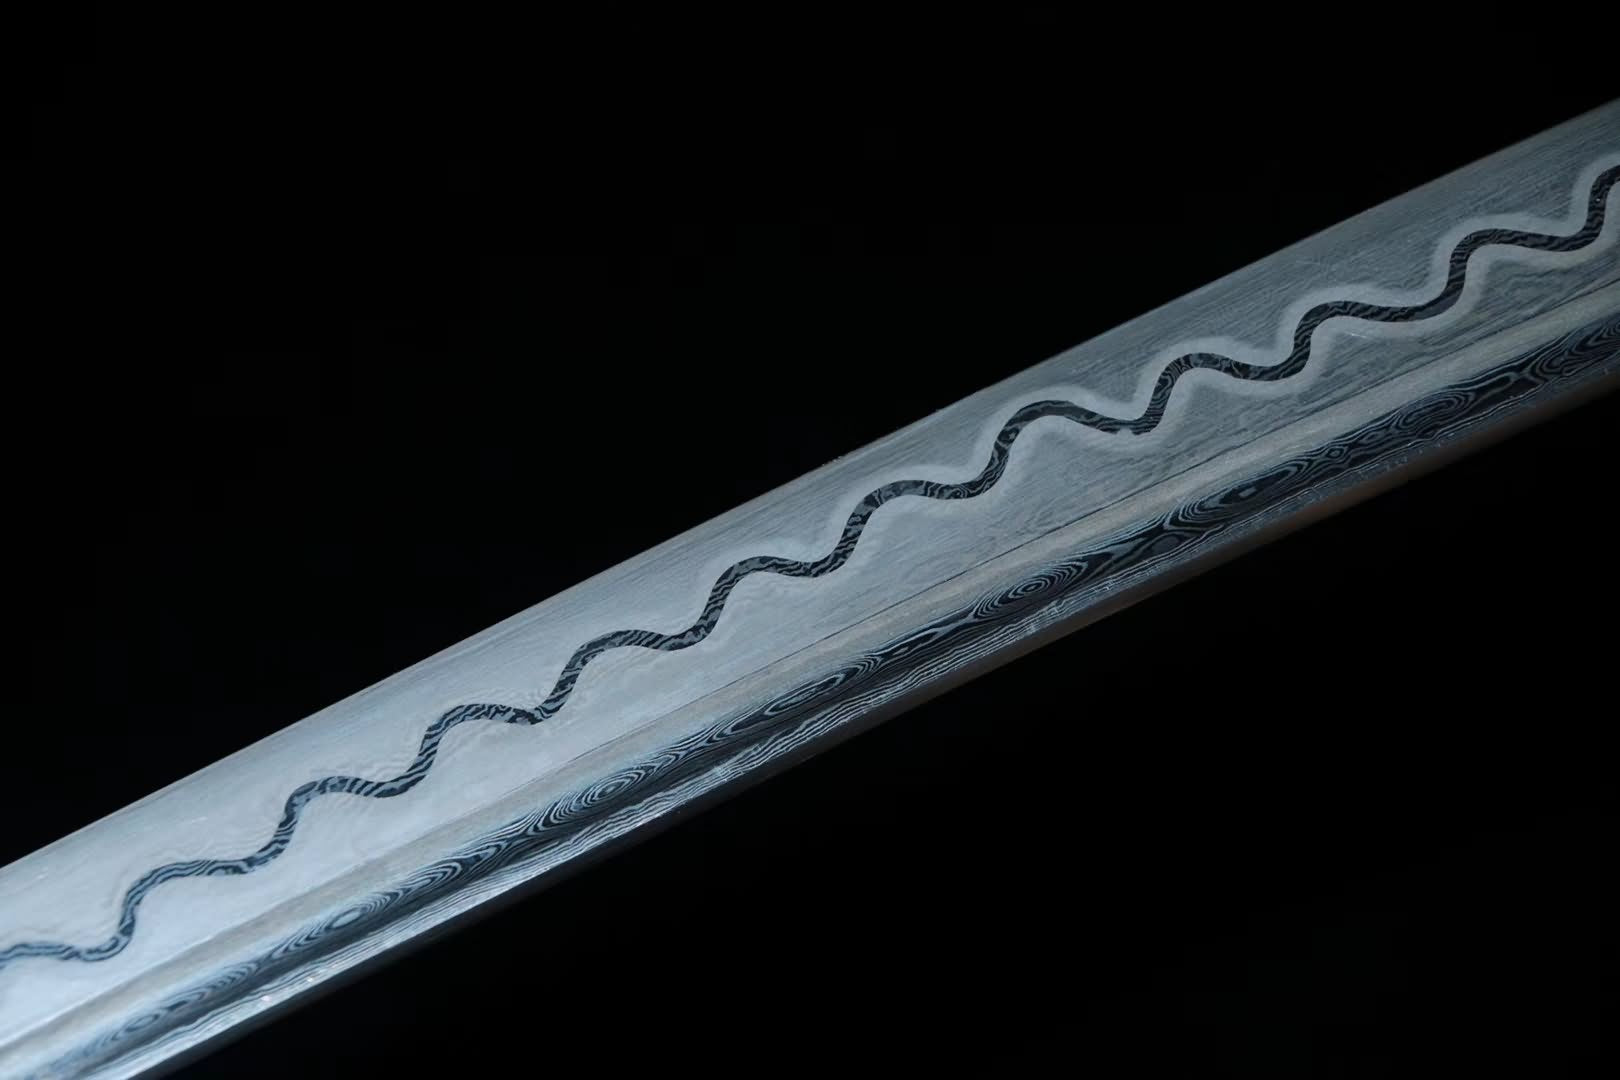 Samurai sword,Damascus steel blade,Wood scabbard - Chinese sword shop